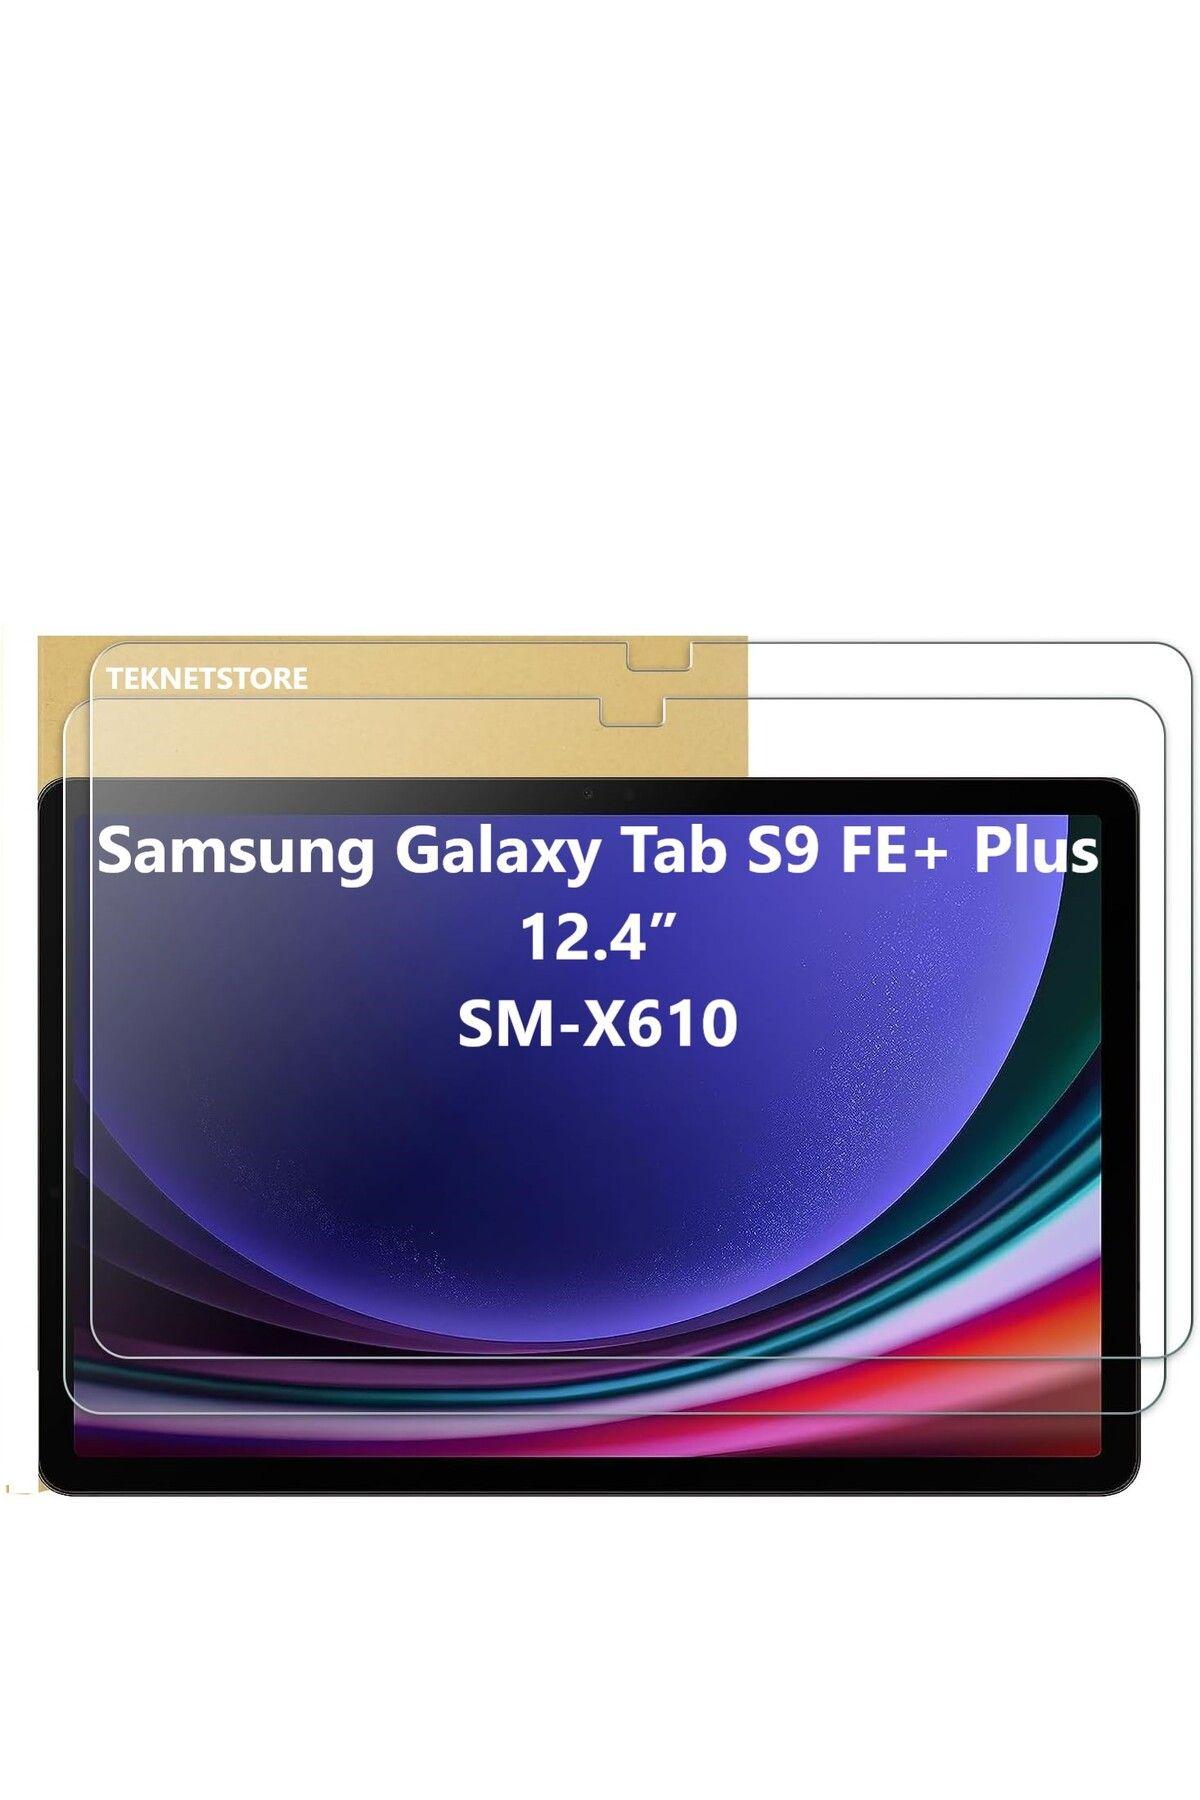 Samsung Galaxy Tab S9 FE ve S9 FE+ [Ana Konu]